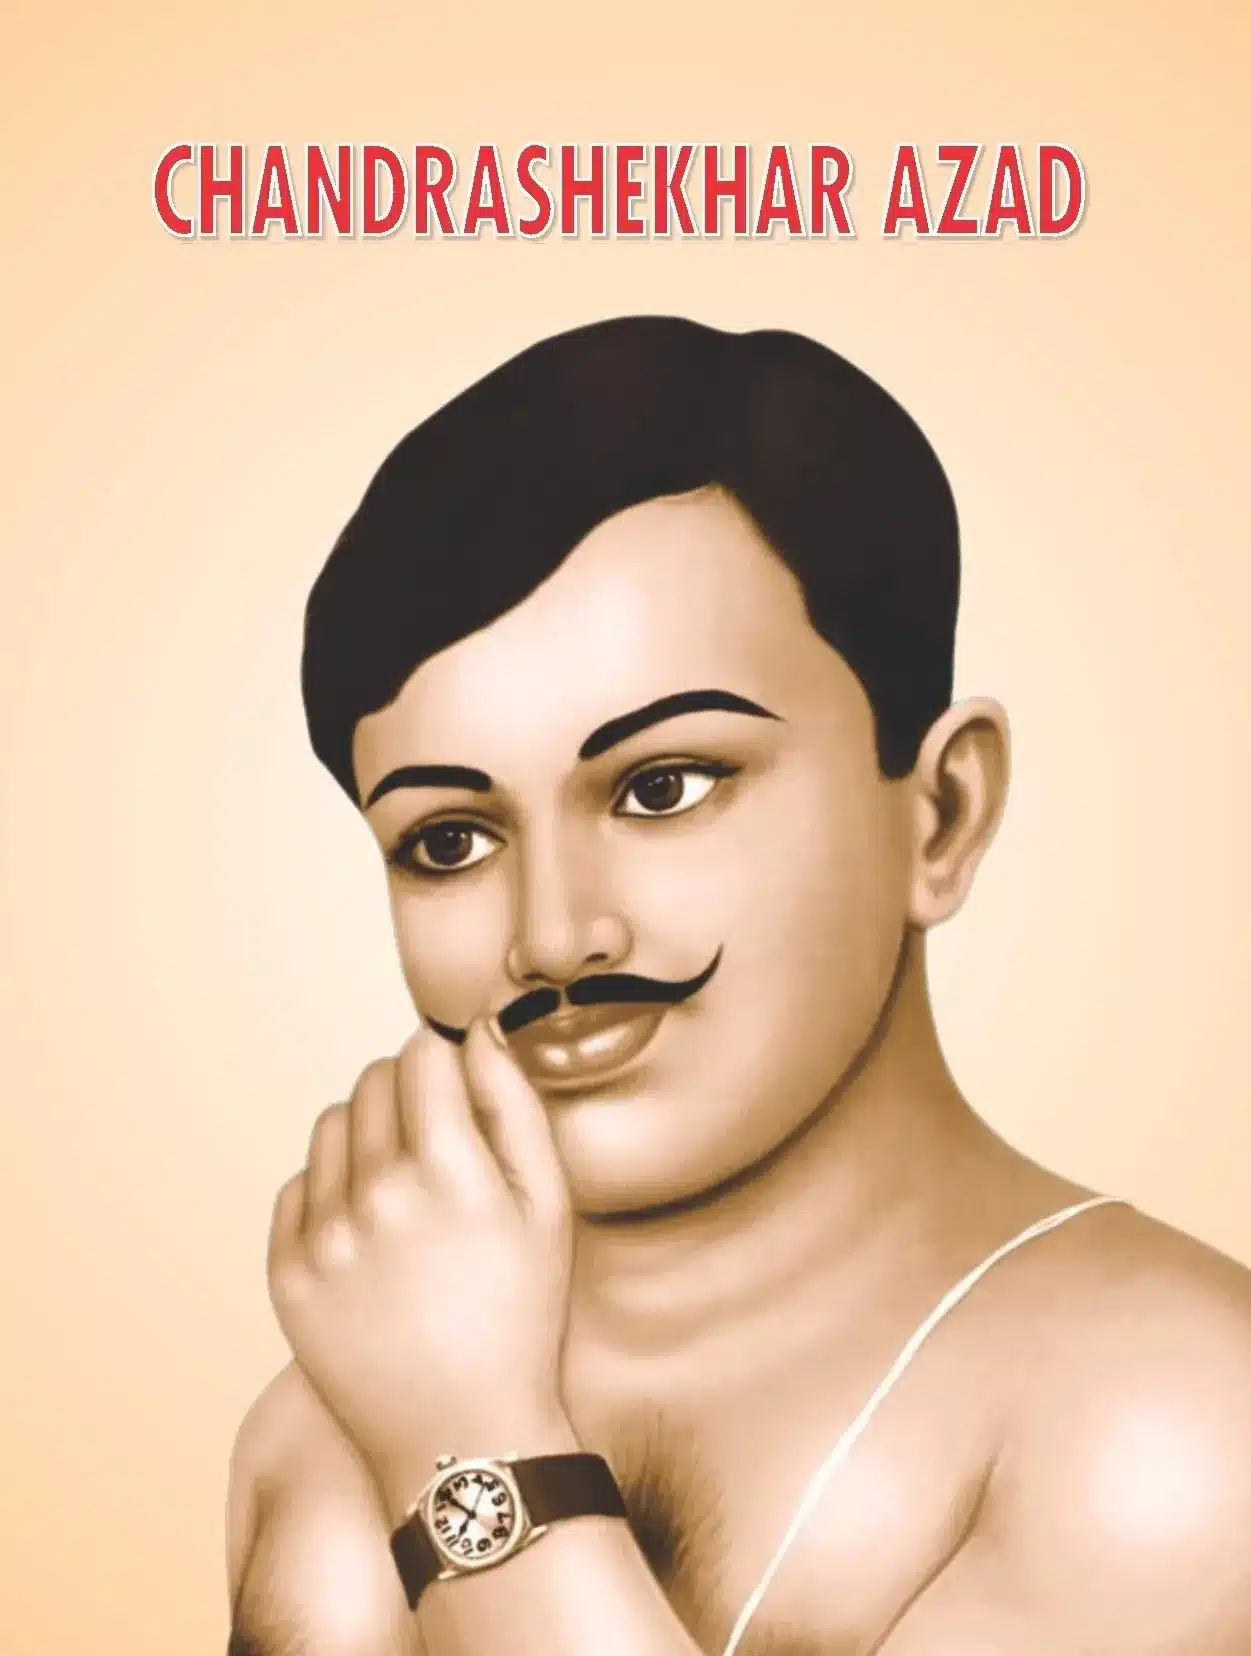 23 July: Remembering Chandrasekhar Azad on his Birth Anniversary